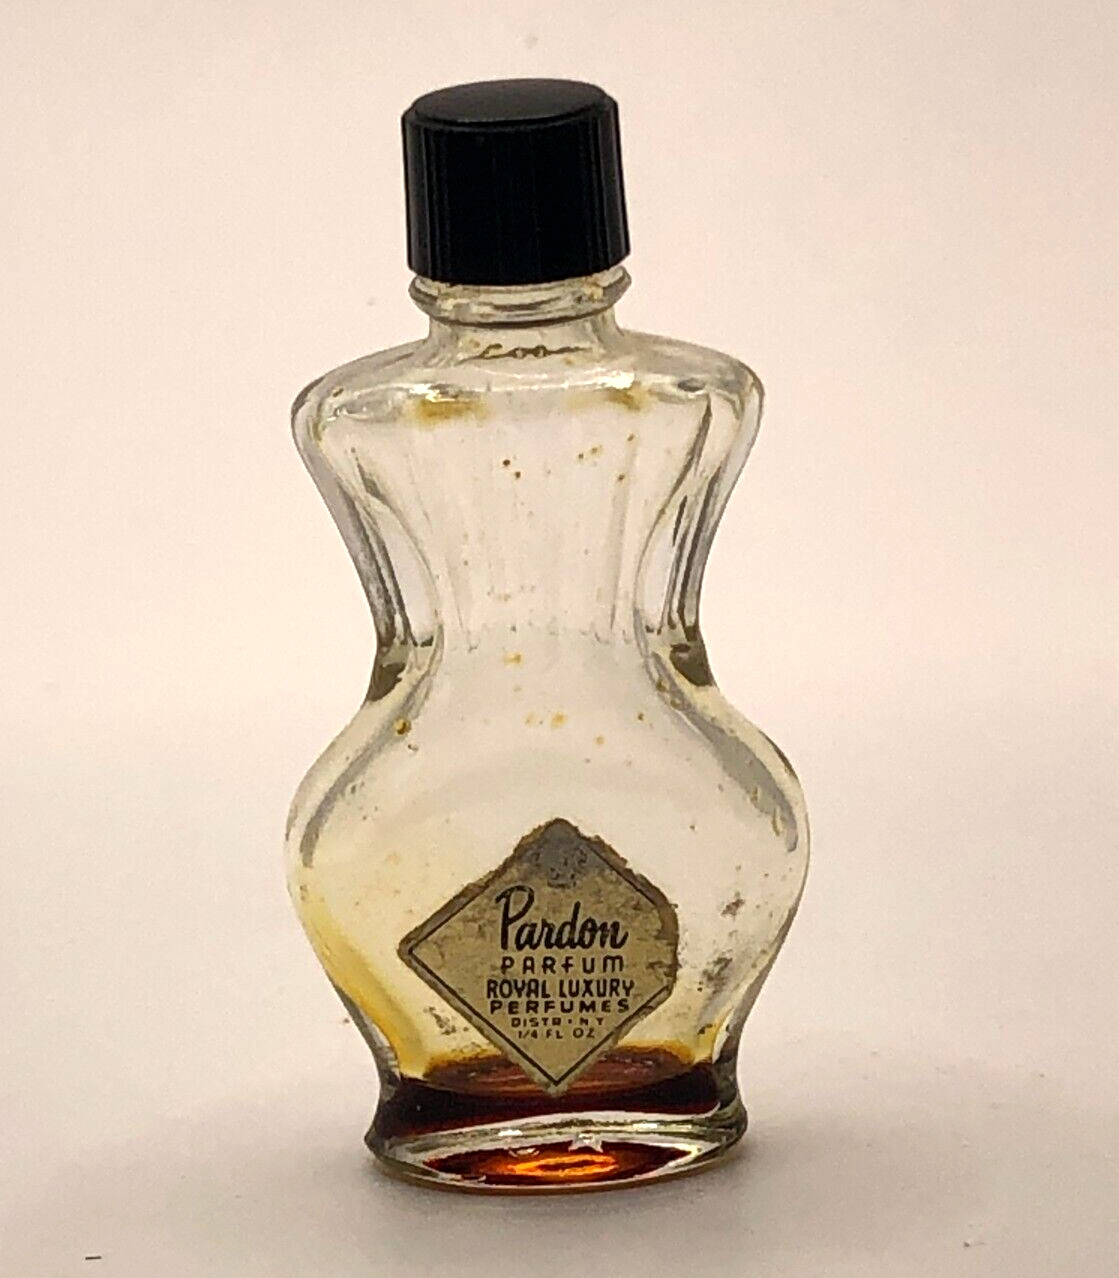 Vintage Pardon Parfum Royal Luxury Perfumes 1/4 oz Bottle